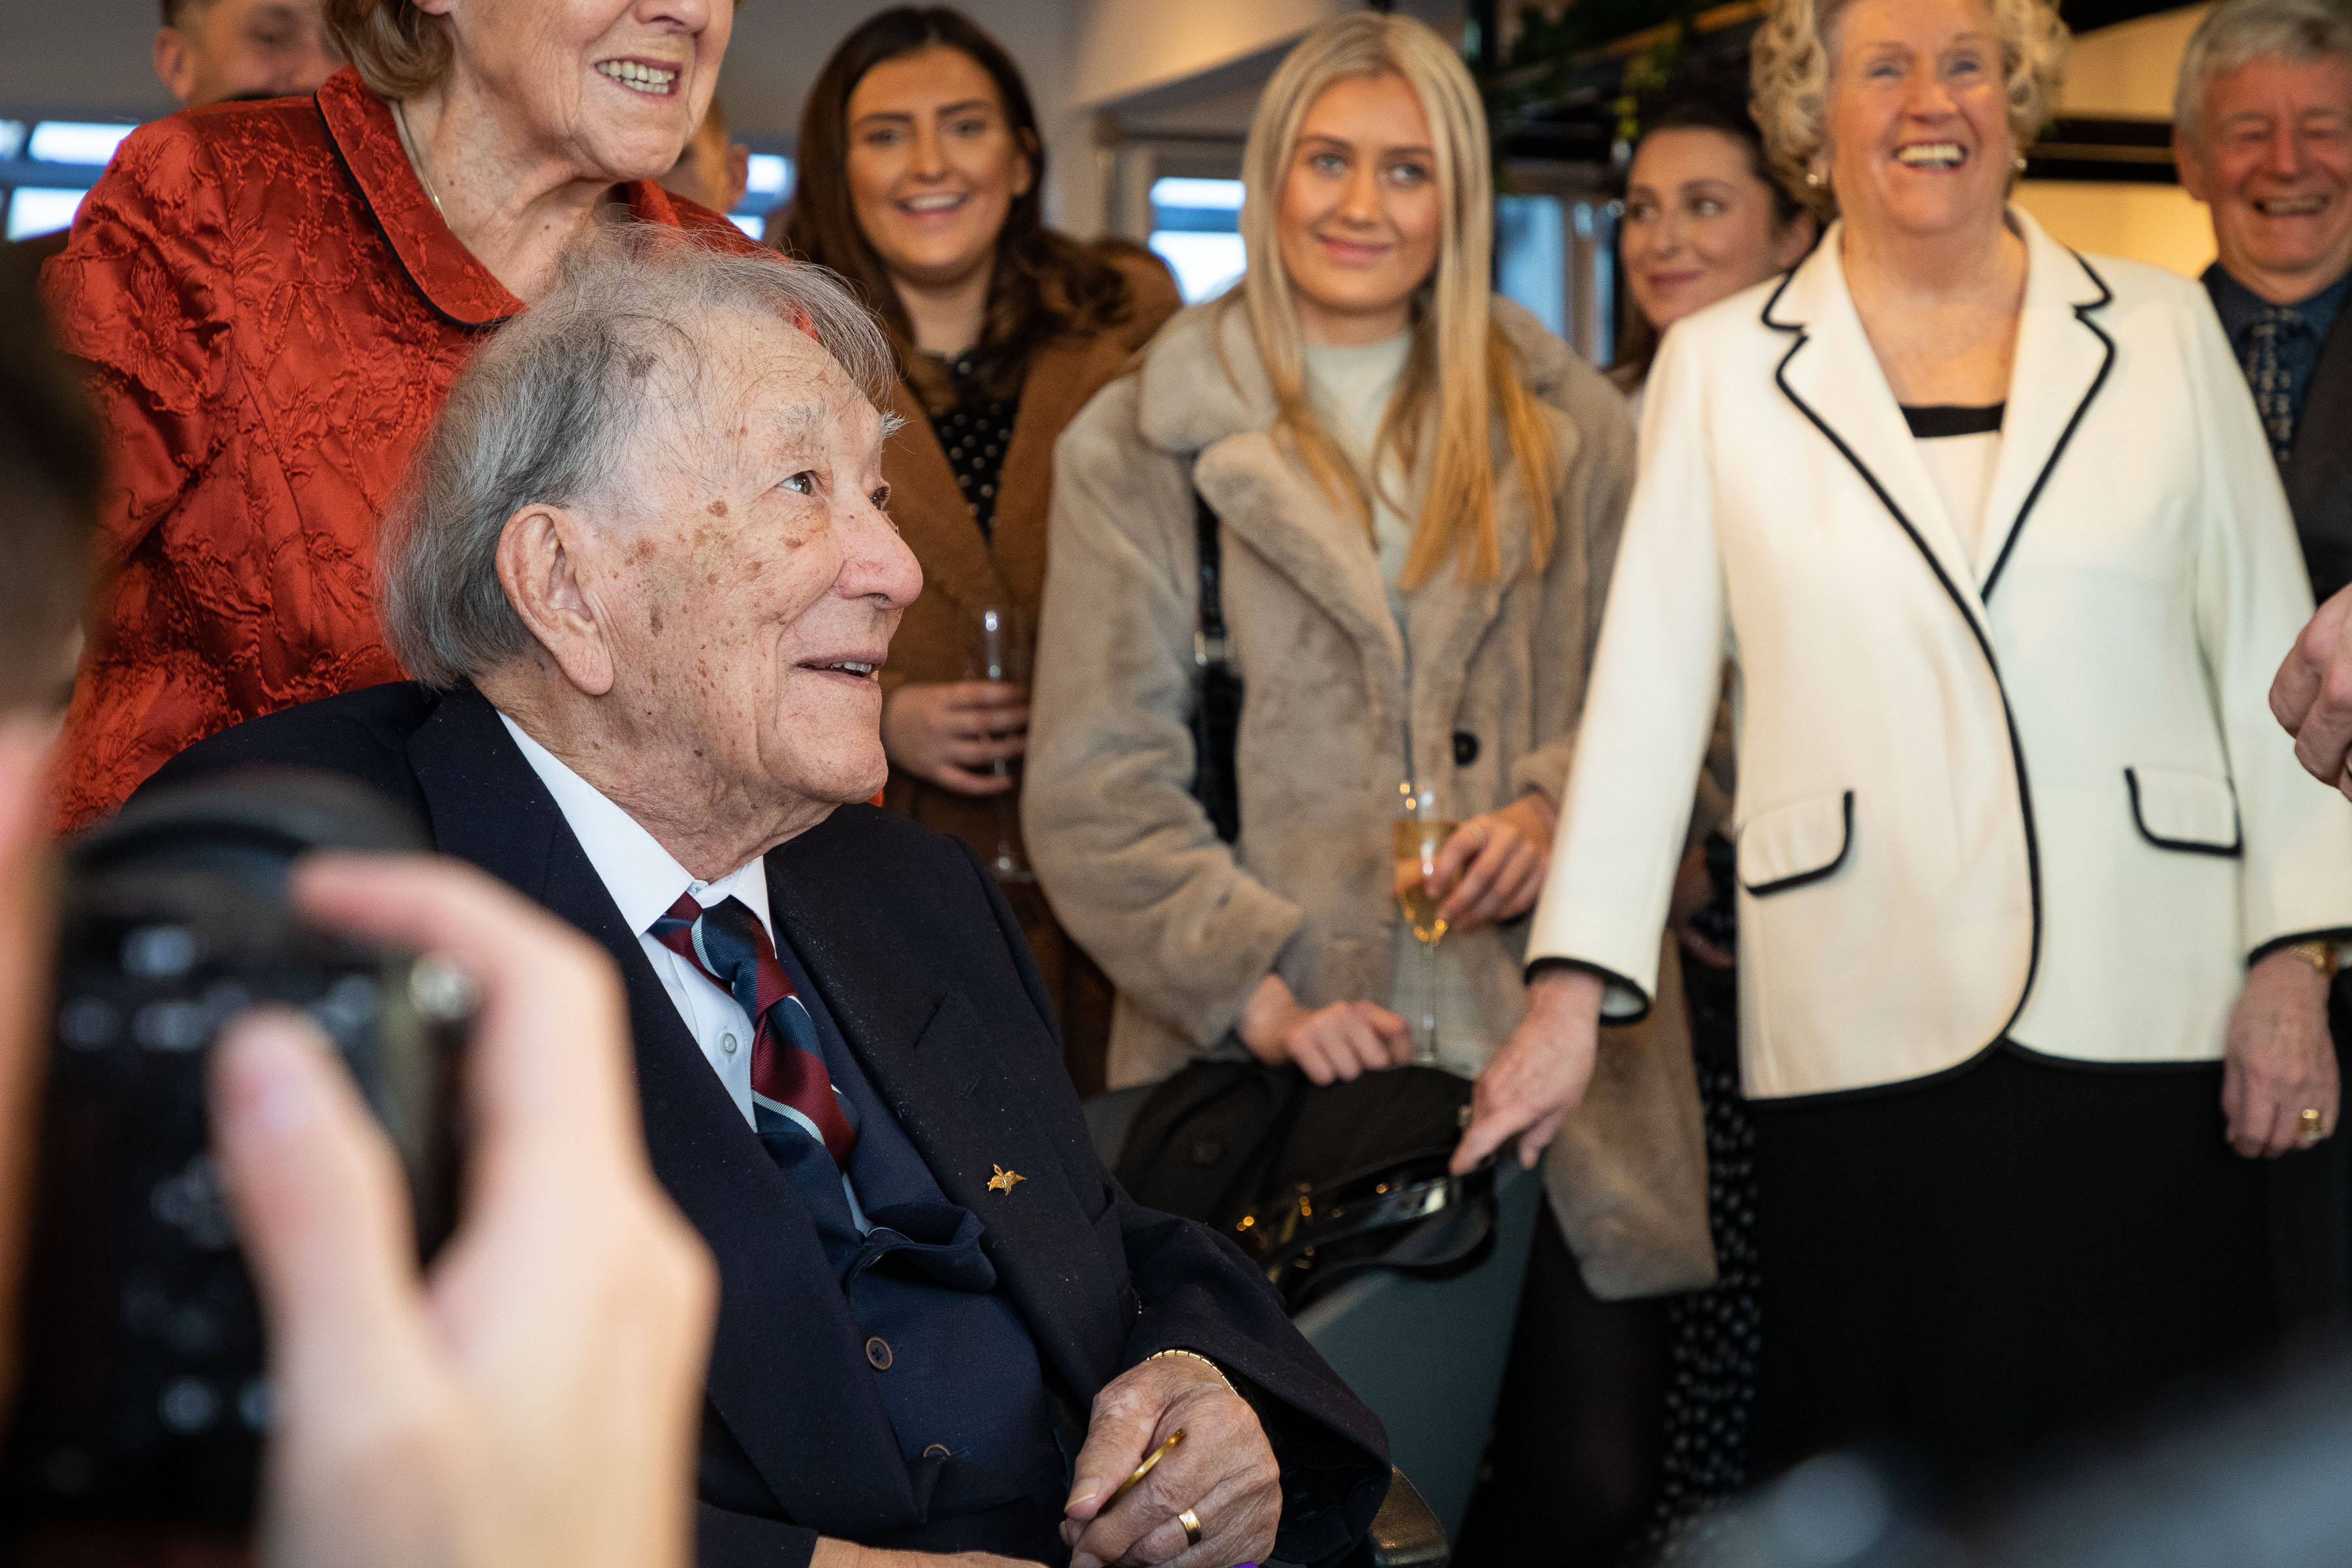 Image shows RAF veteran and civilians smiling.